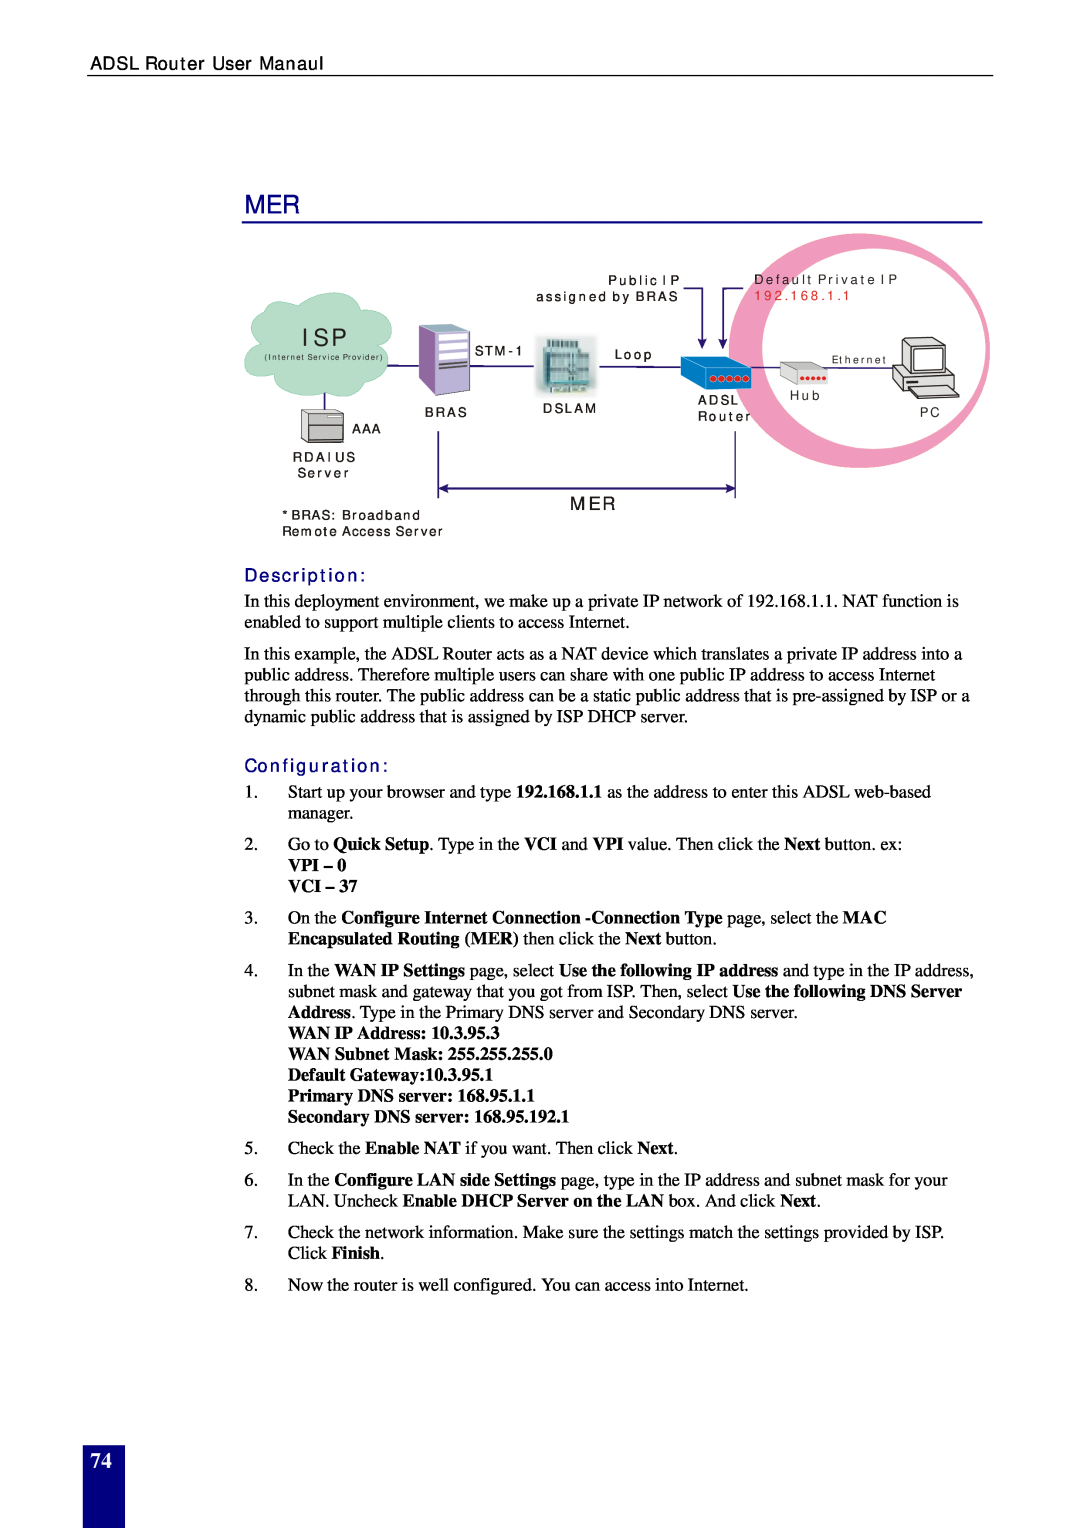 Dynalink RTA770W user manual Description, Configuration, VPI - 0 VCI, WAN IP Address 